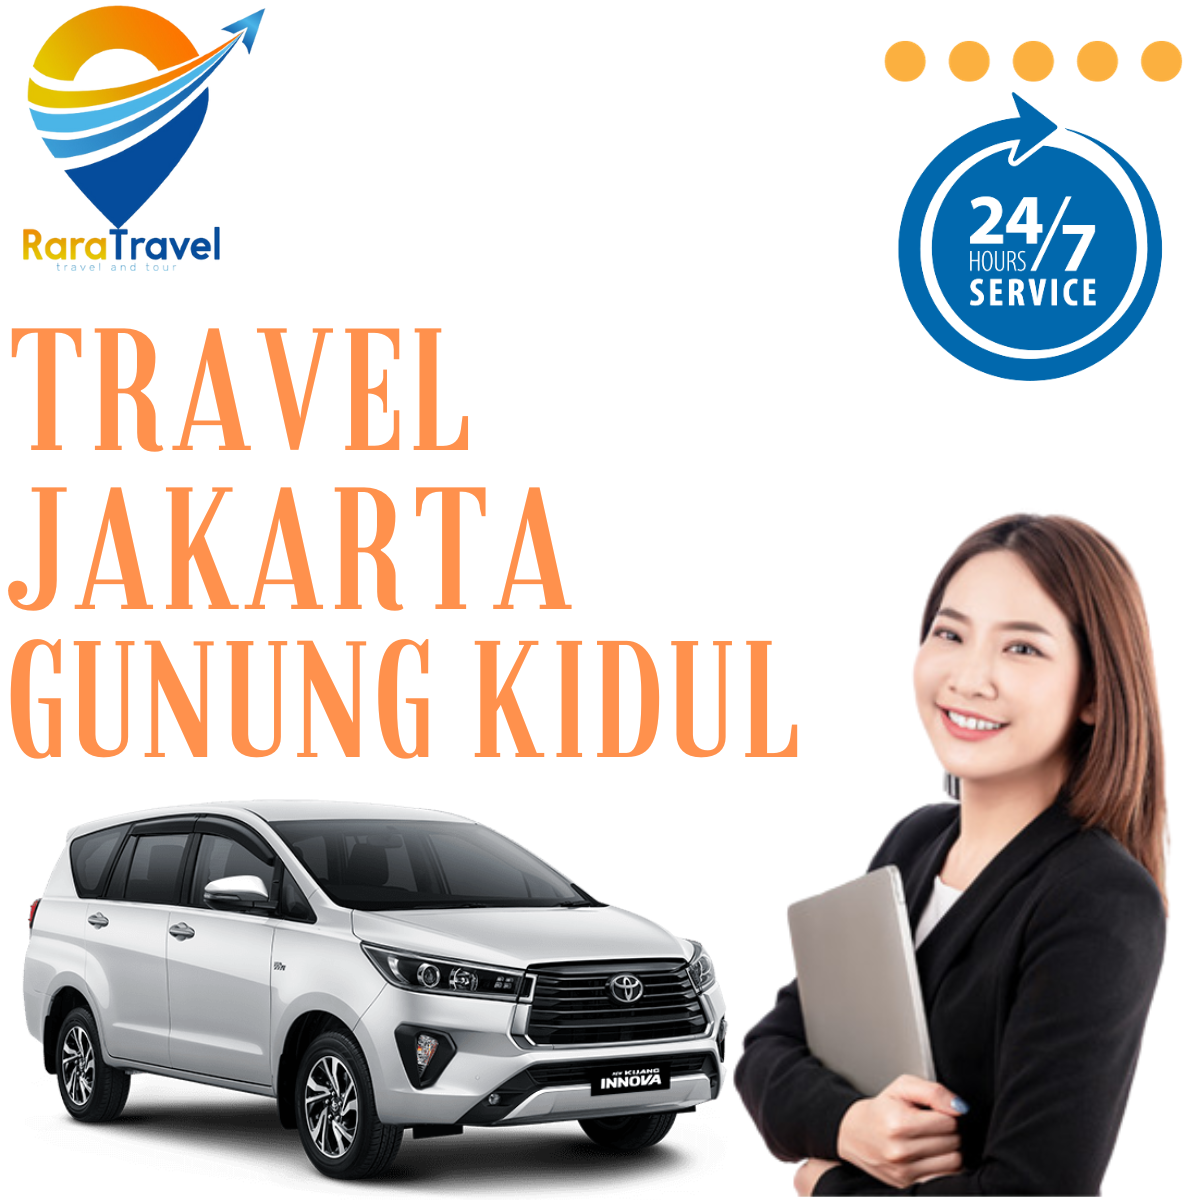 Travel Jakarta Gunung Kidul via TOLL Harga Tiket Murah